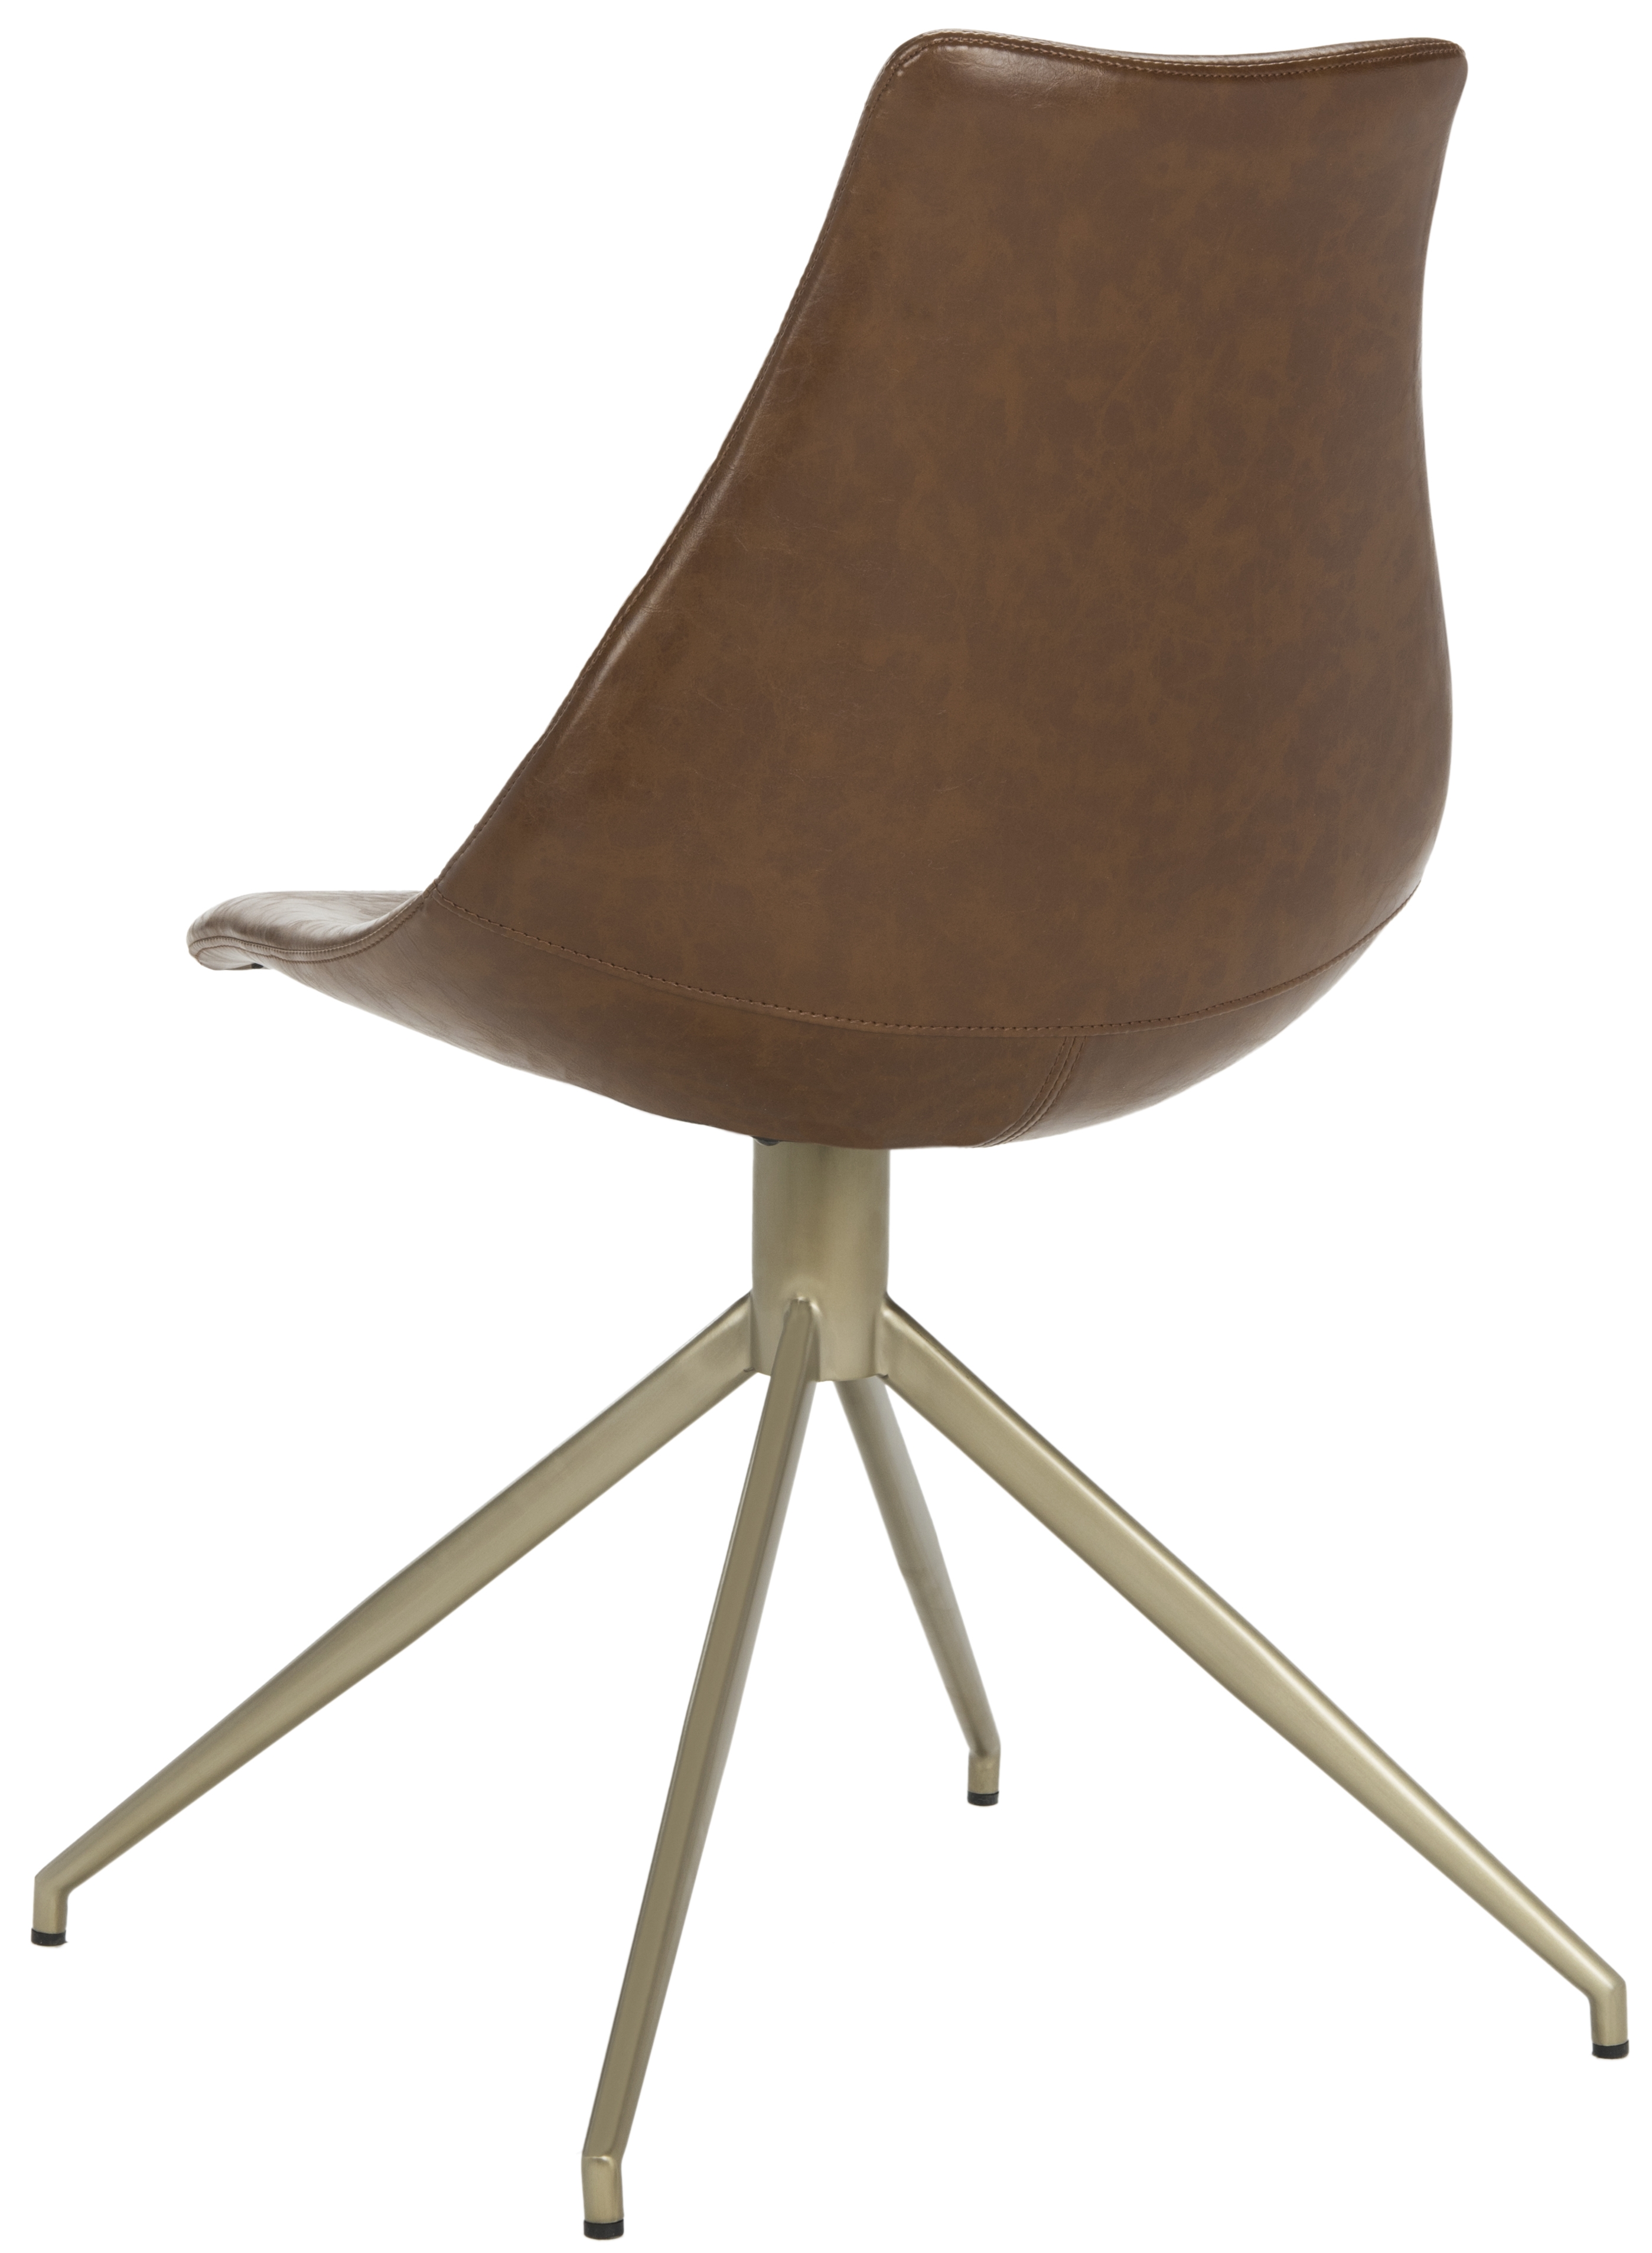 Lynette Midcentury Modern Leather Swivel Dining Chair - Light Brown/Brass - Arlo Home - Image 7